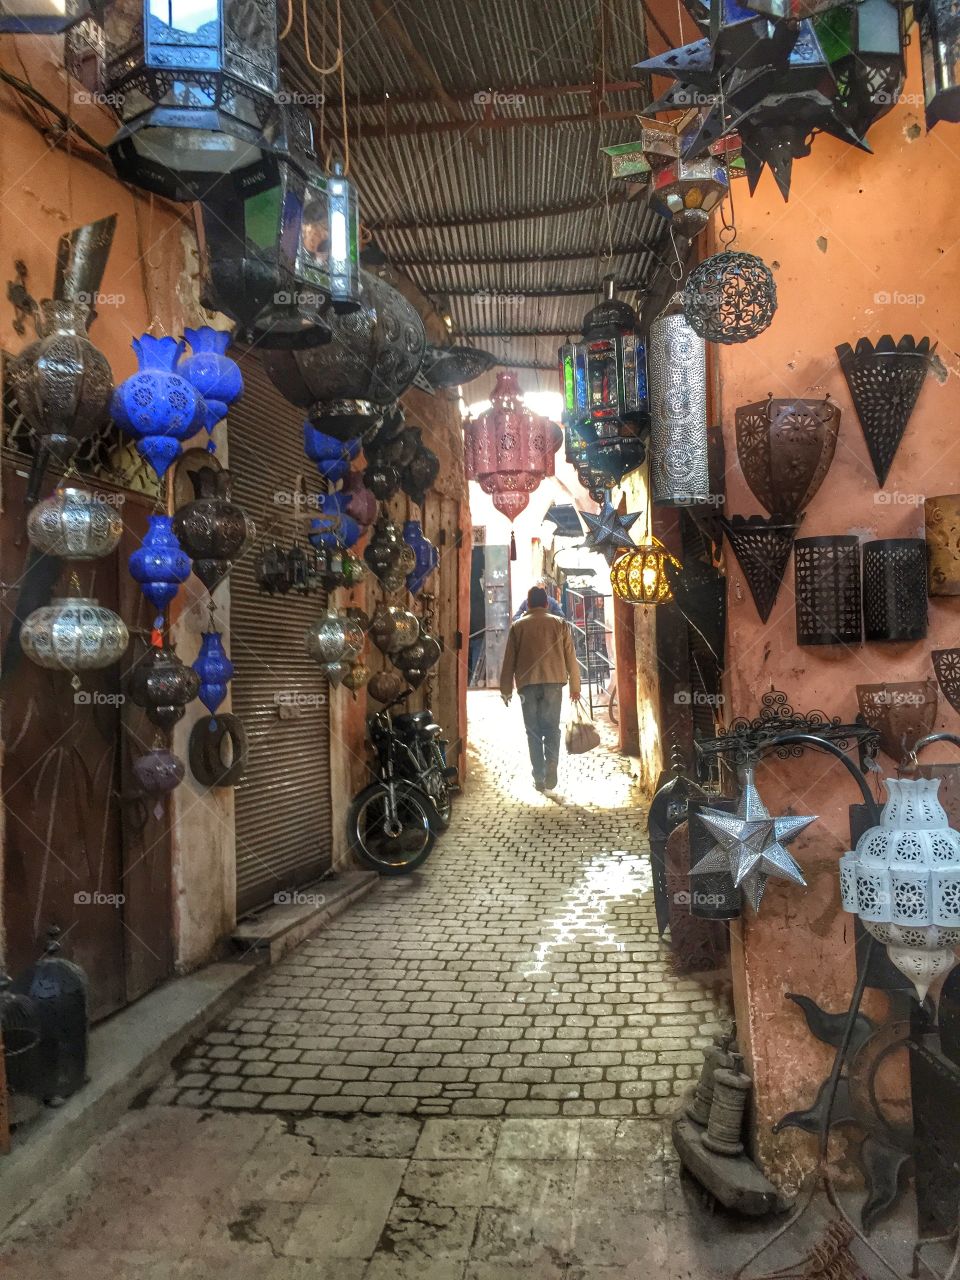 The metalworkers souk in Marrakech 